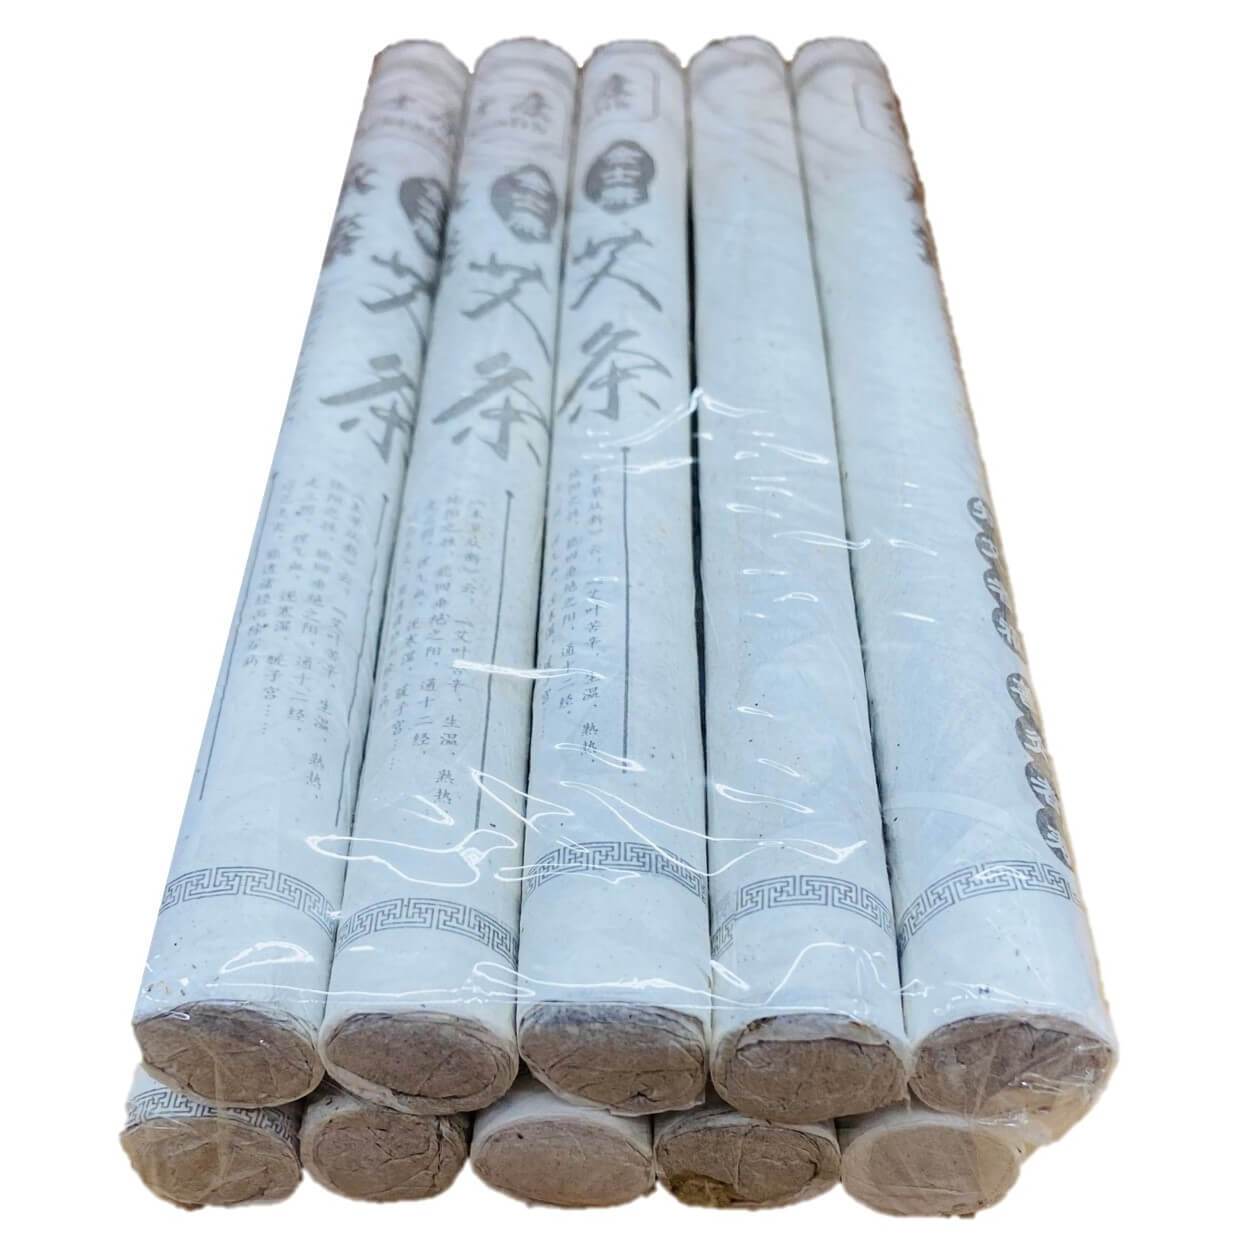 Premium Cheng Zheng Ai Tiao, Aged Moxa Rolls Sticks (10 Large Rolls) - Buy at New Green Nutrition